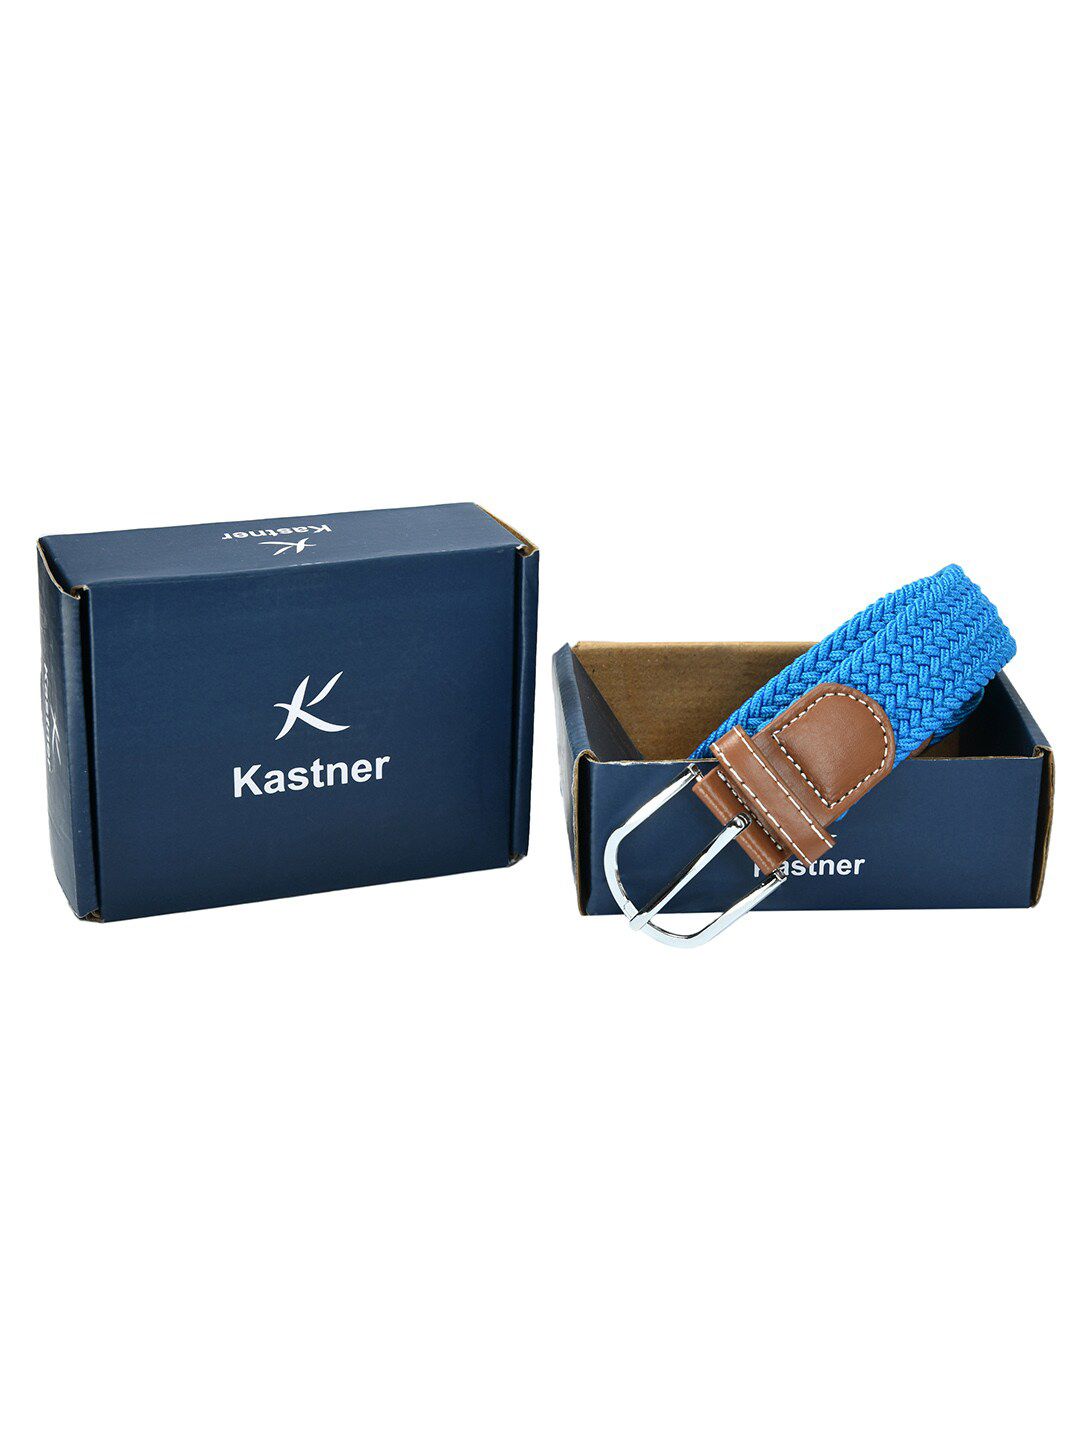 Kastner Unisex Blue Braided Stretchable Belt Price in India